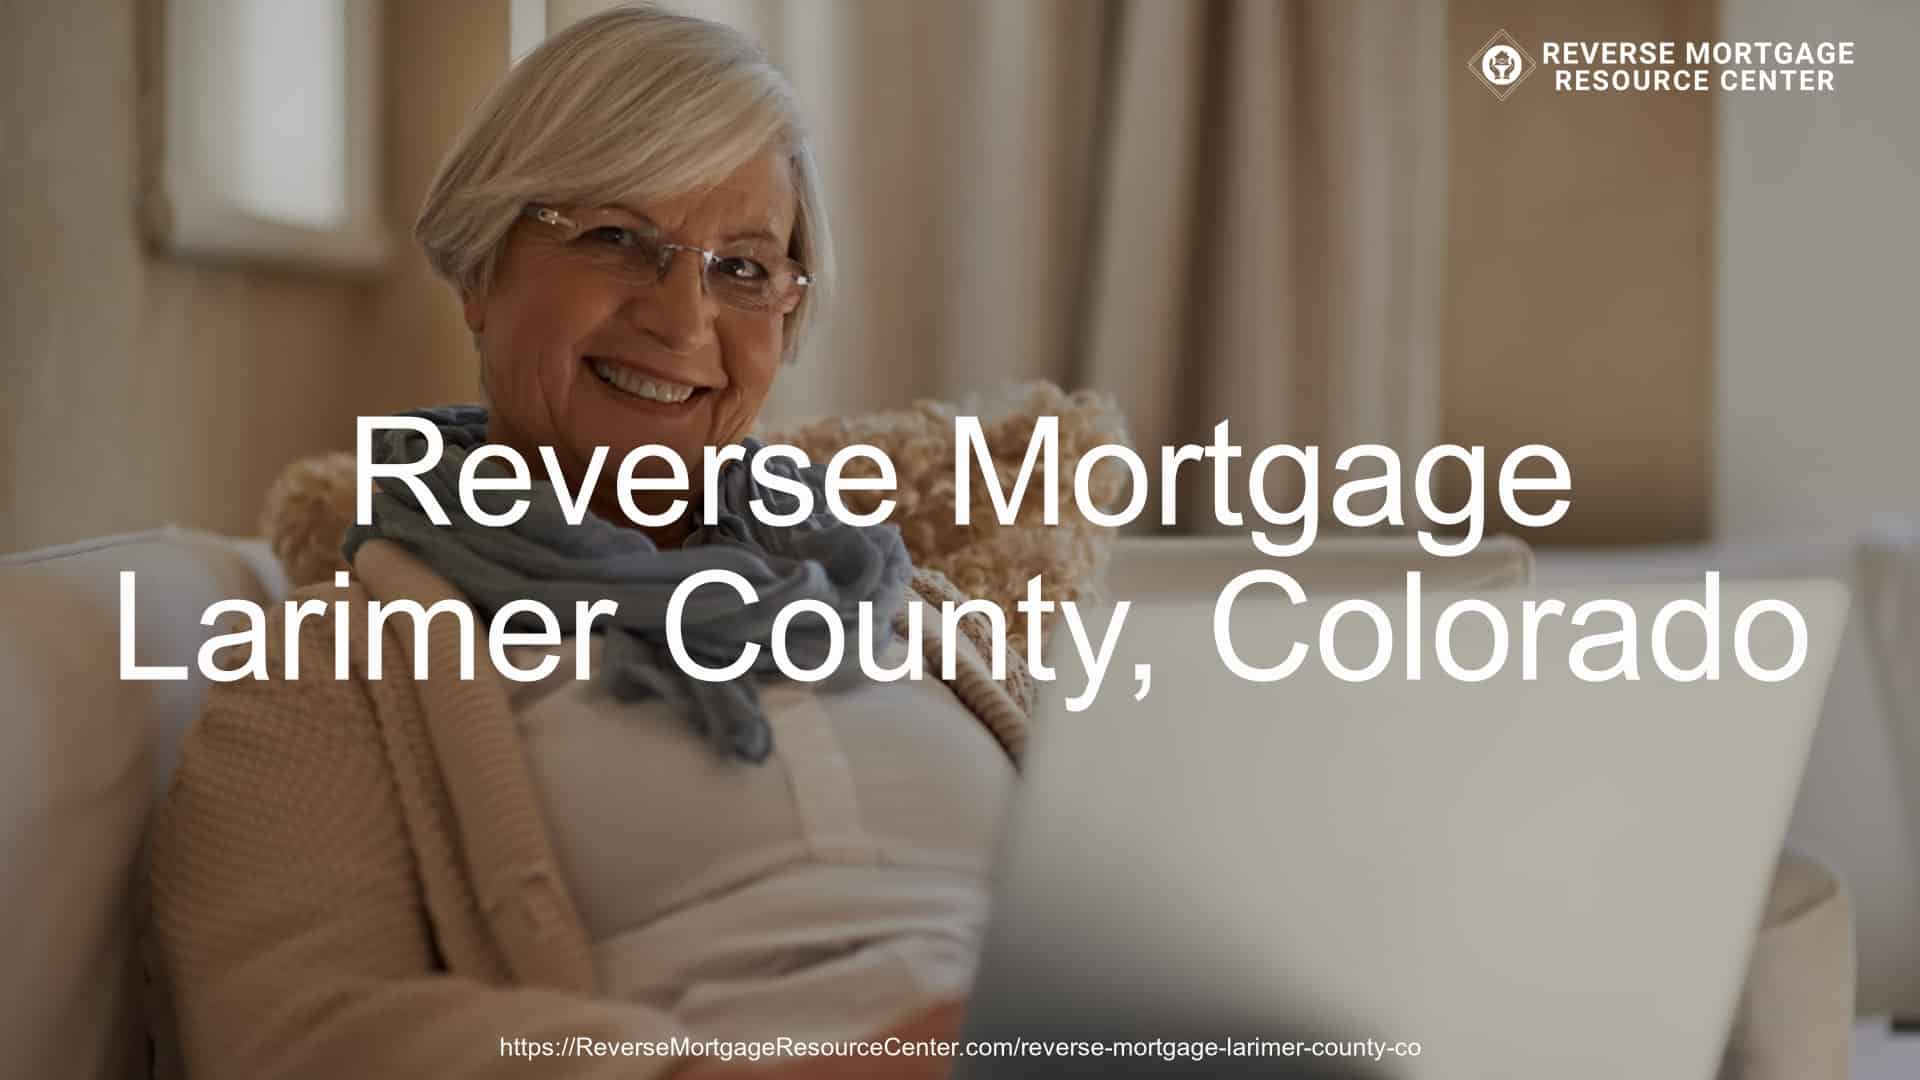 Reverse Mortgage Loans in Larimer County Colorado